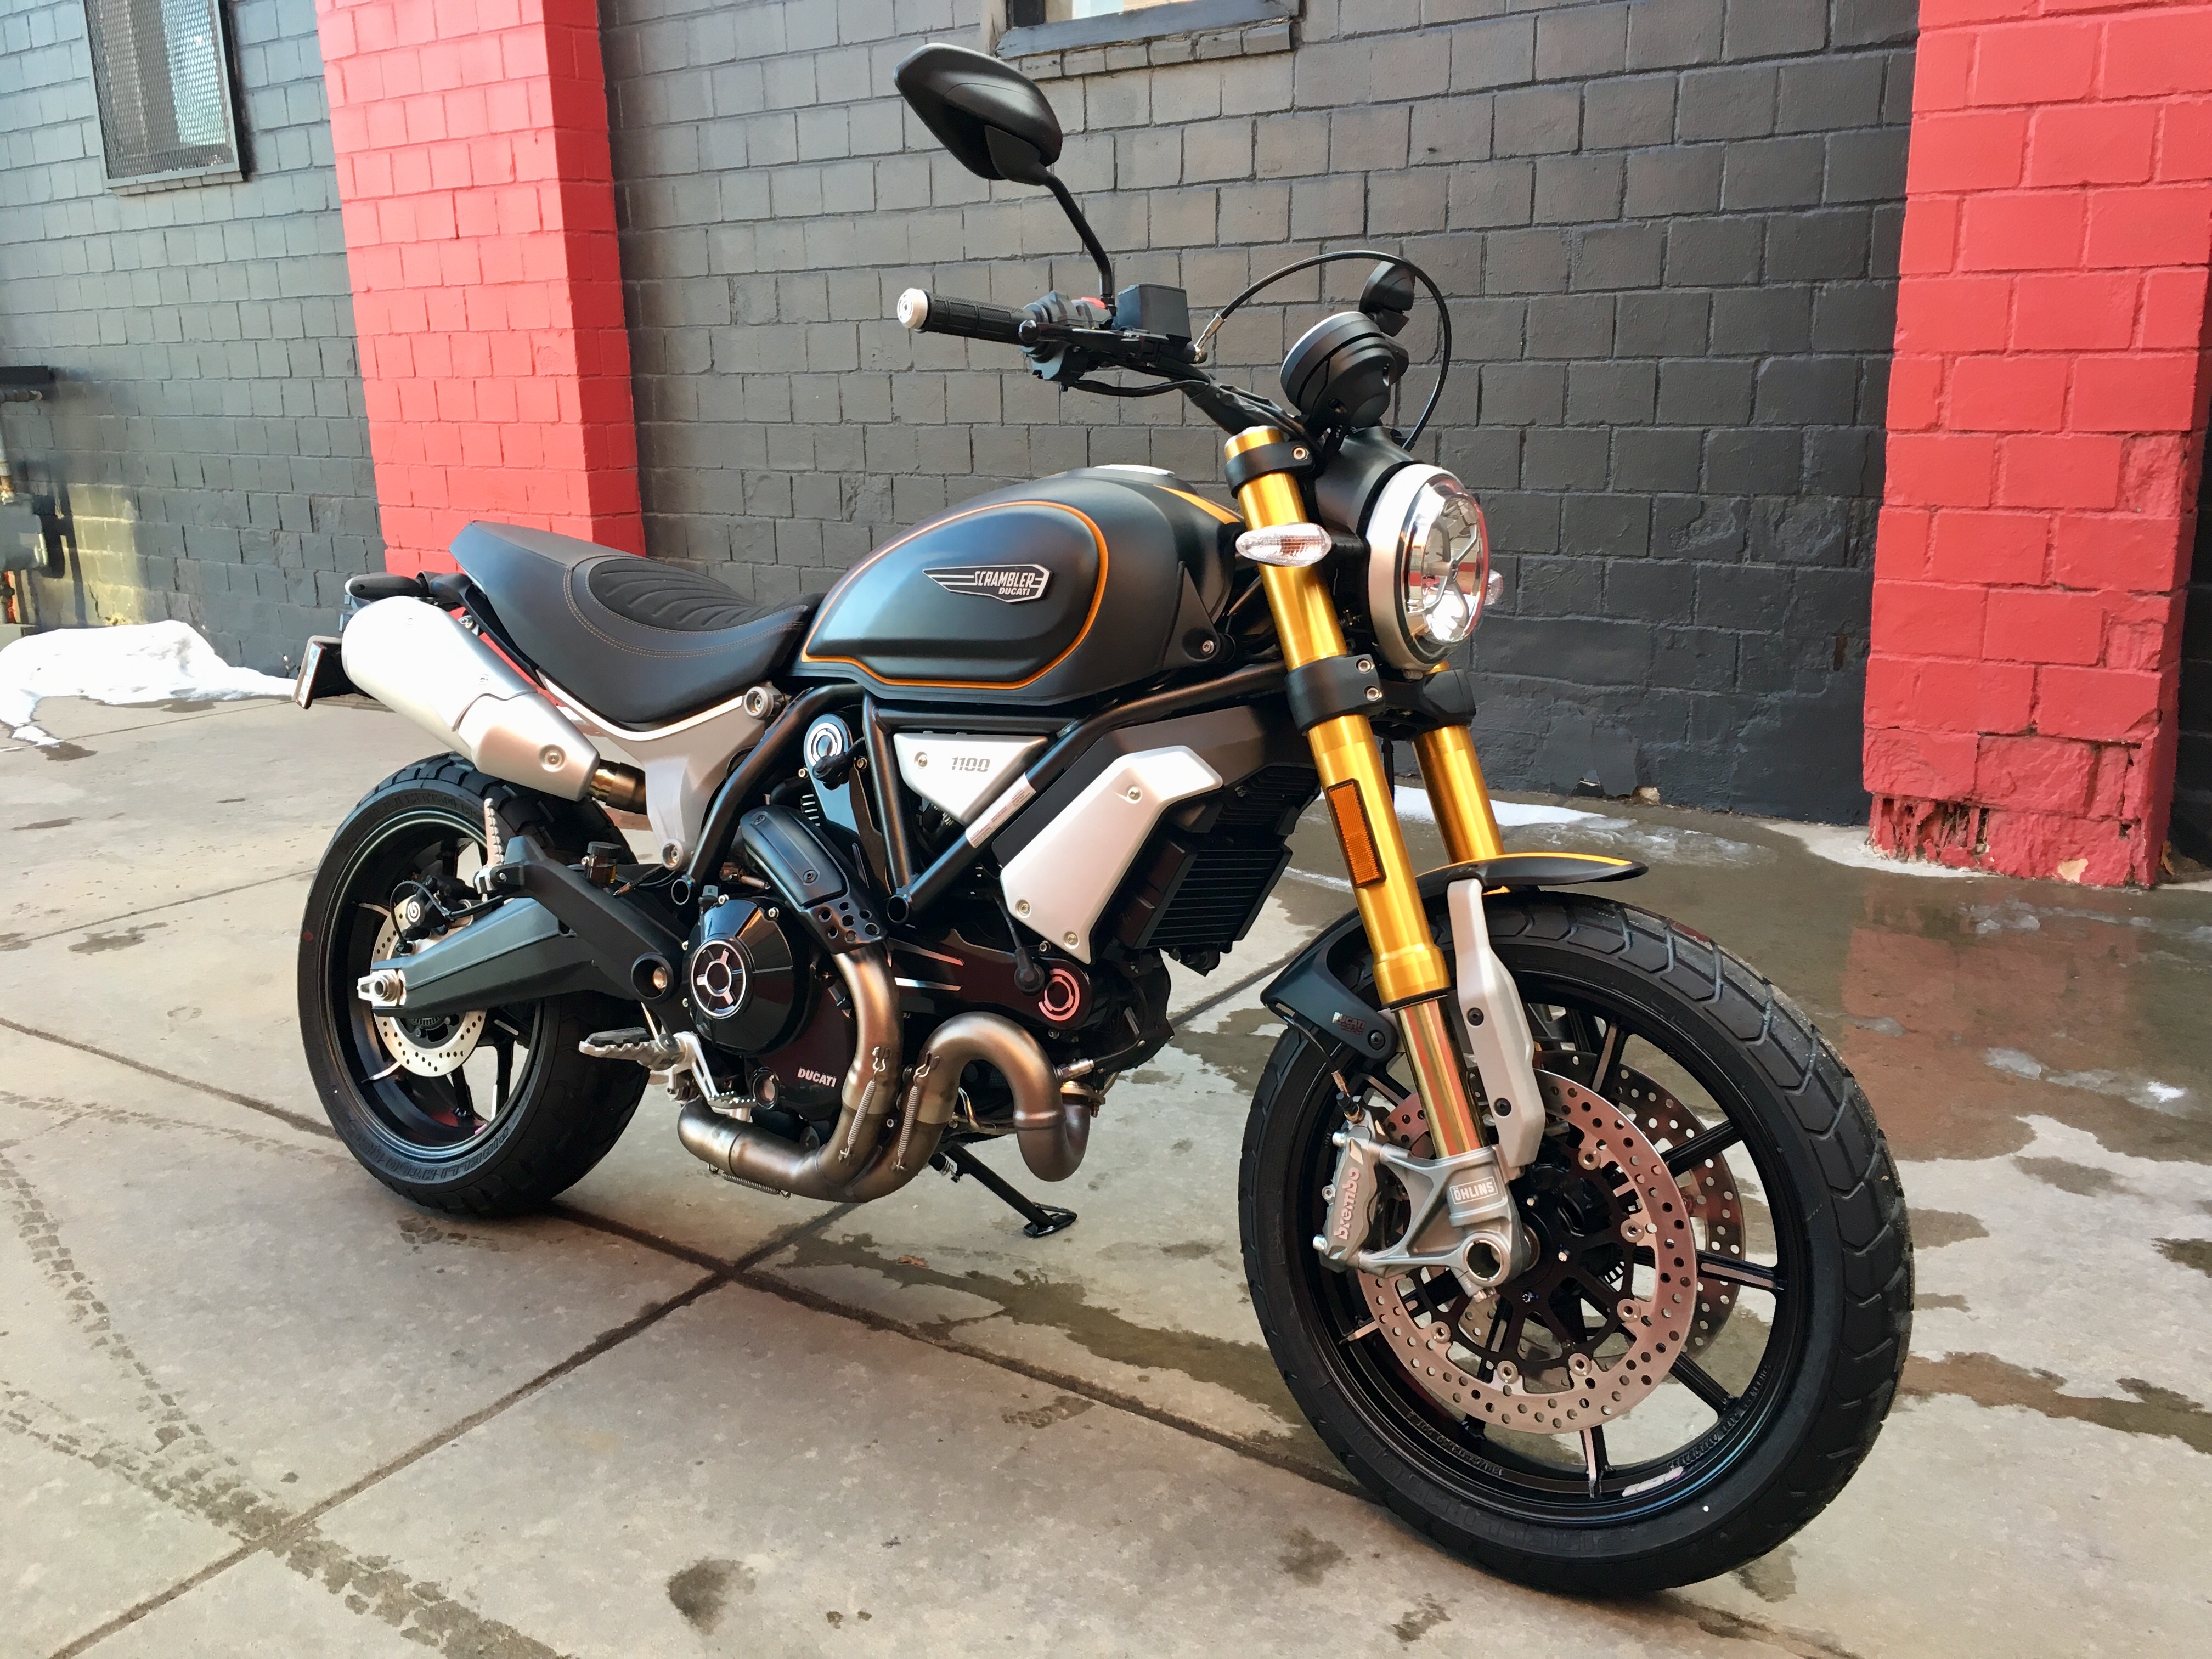 New 2019 DUCATI SCRAMBLER 1100 SPORT DEMO Motorcycle in Denver #18D82 ...